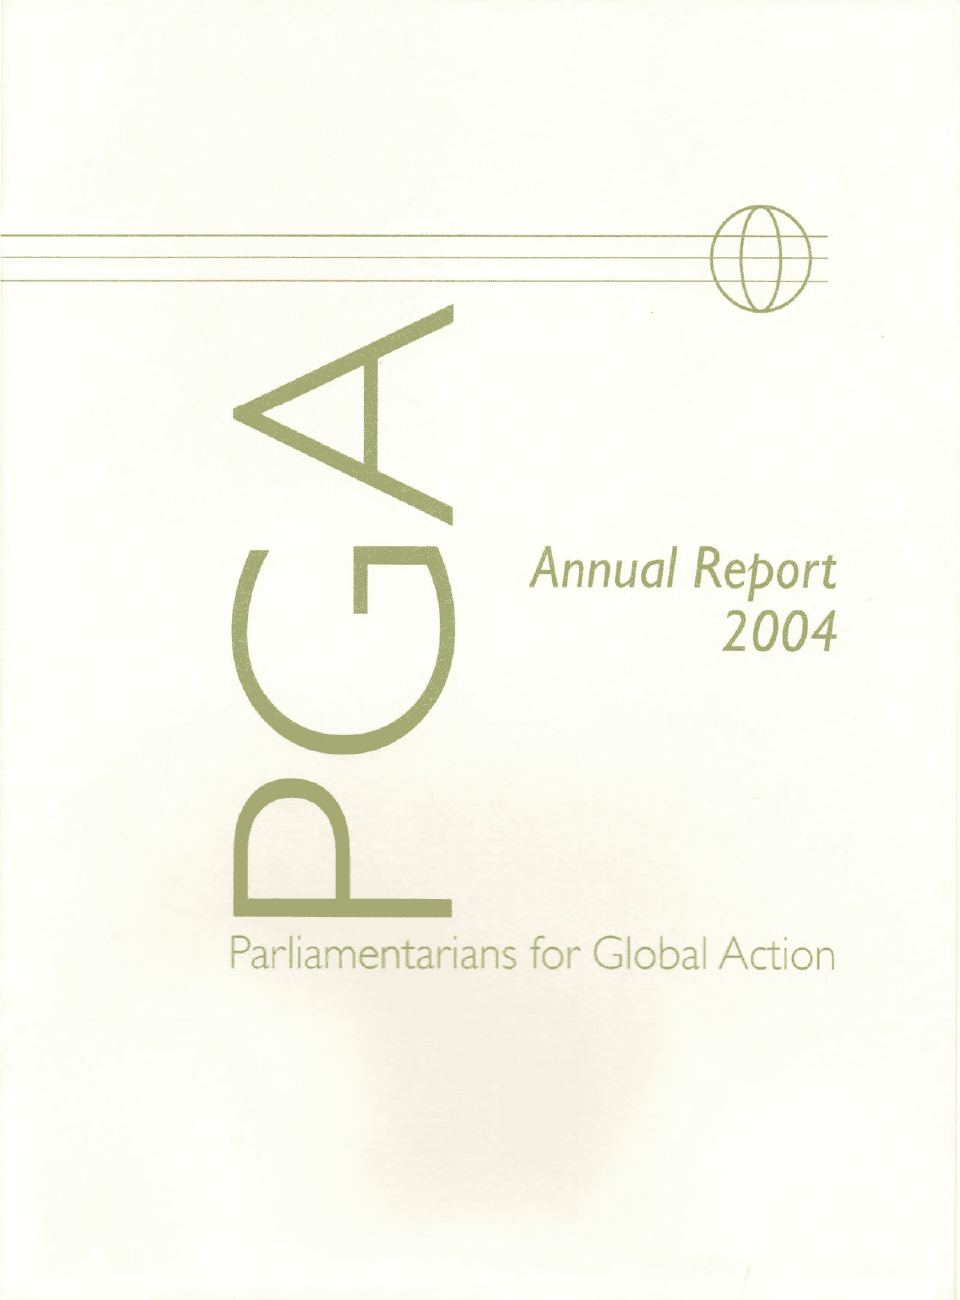 Rapport annuel de PGA 2004